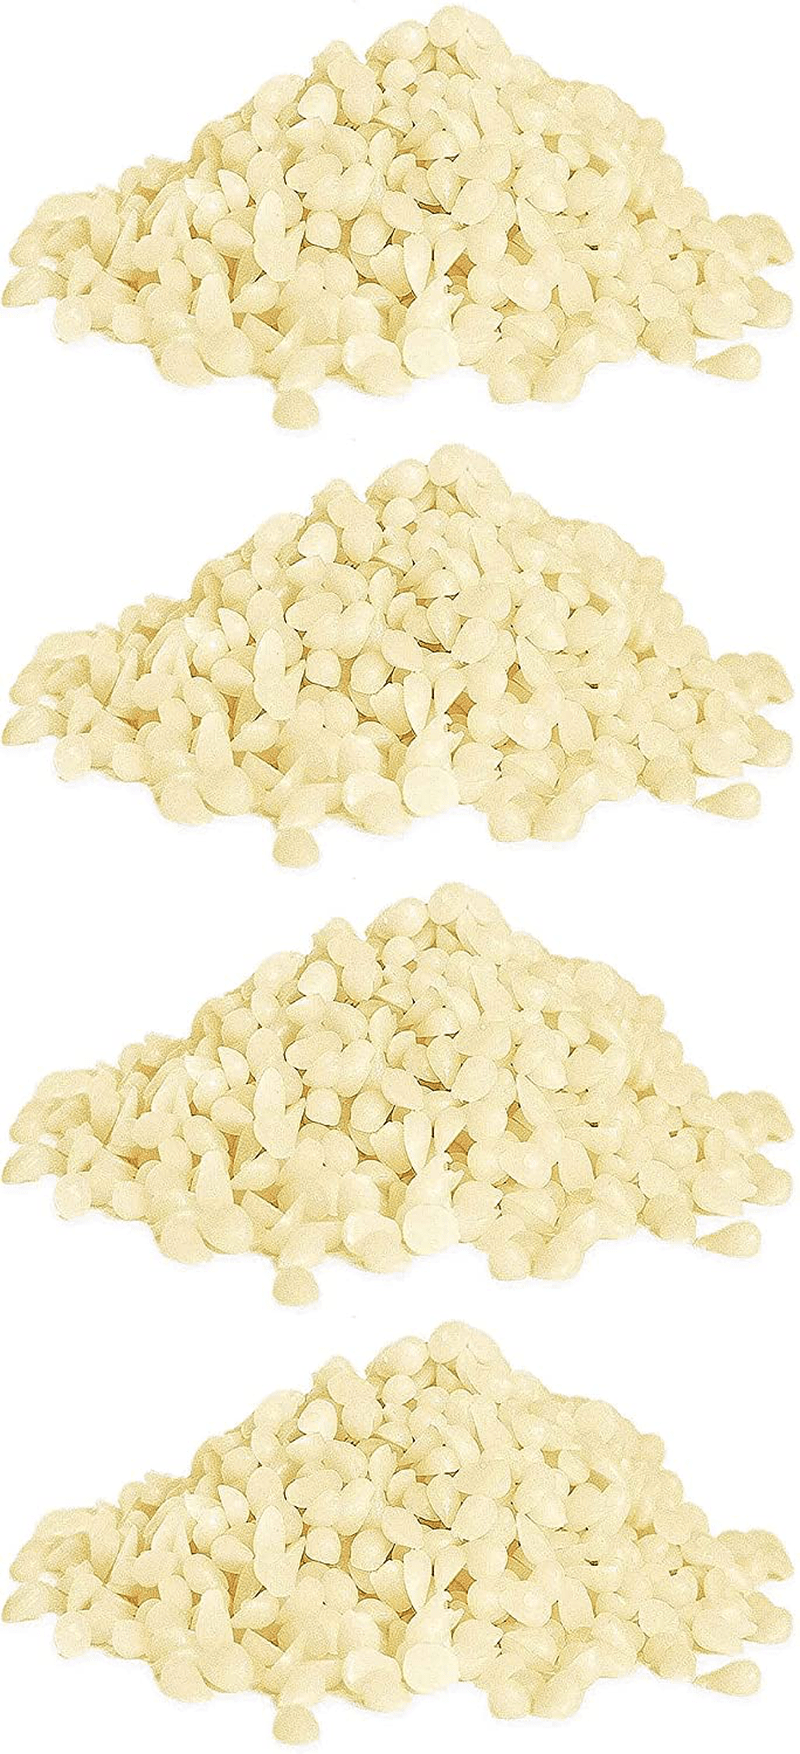 YIHANG White Beeswax Pellets 10 lb-(160 oz) (Three Pack)